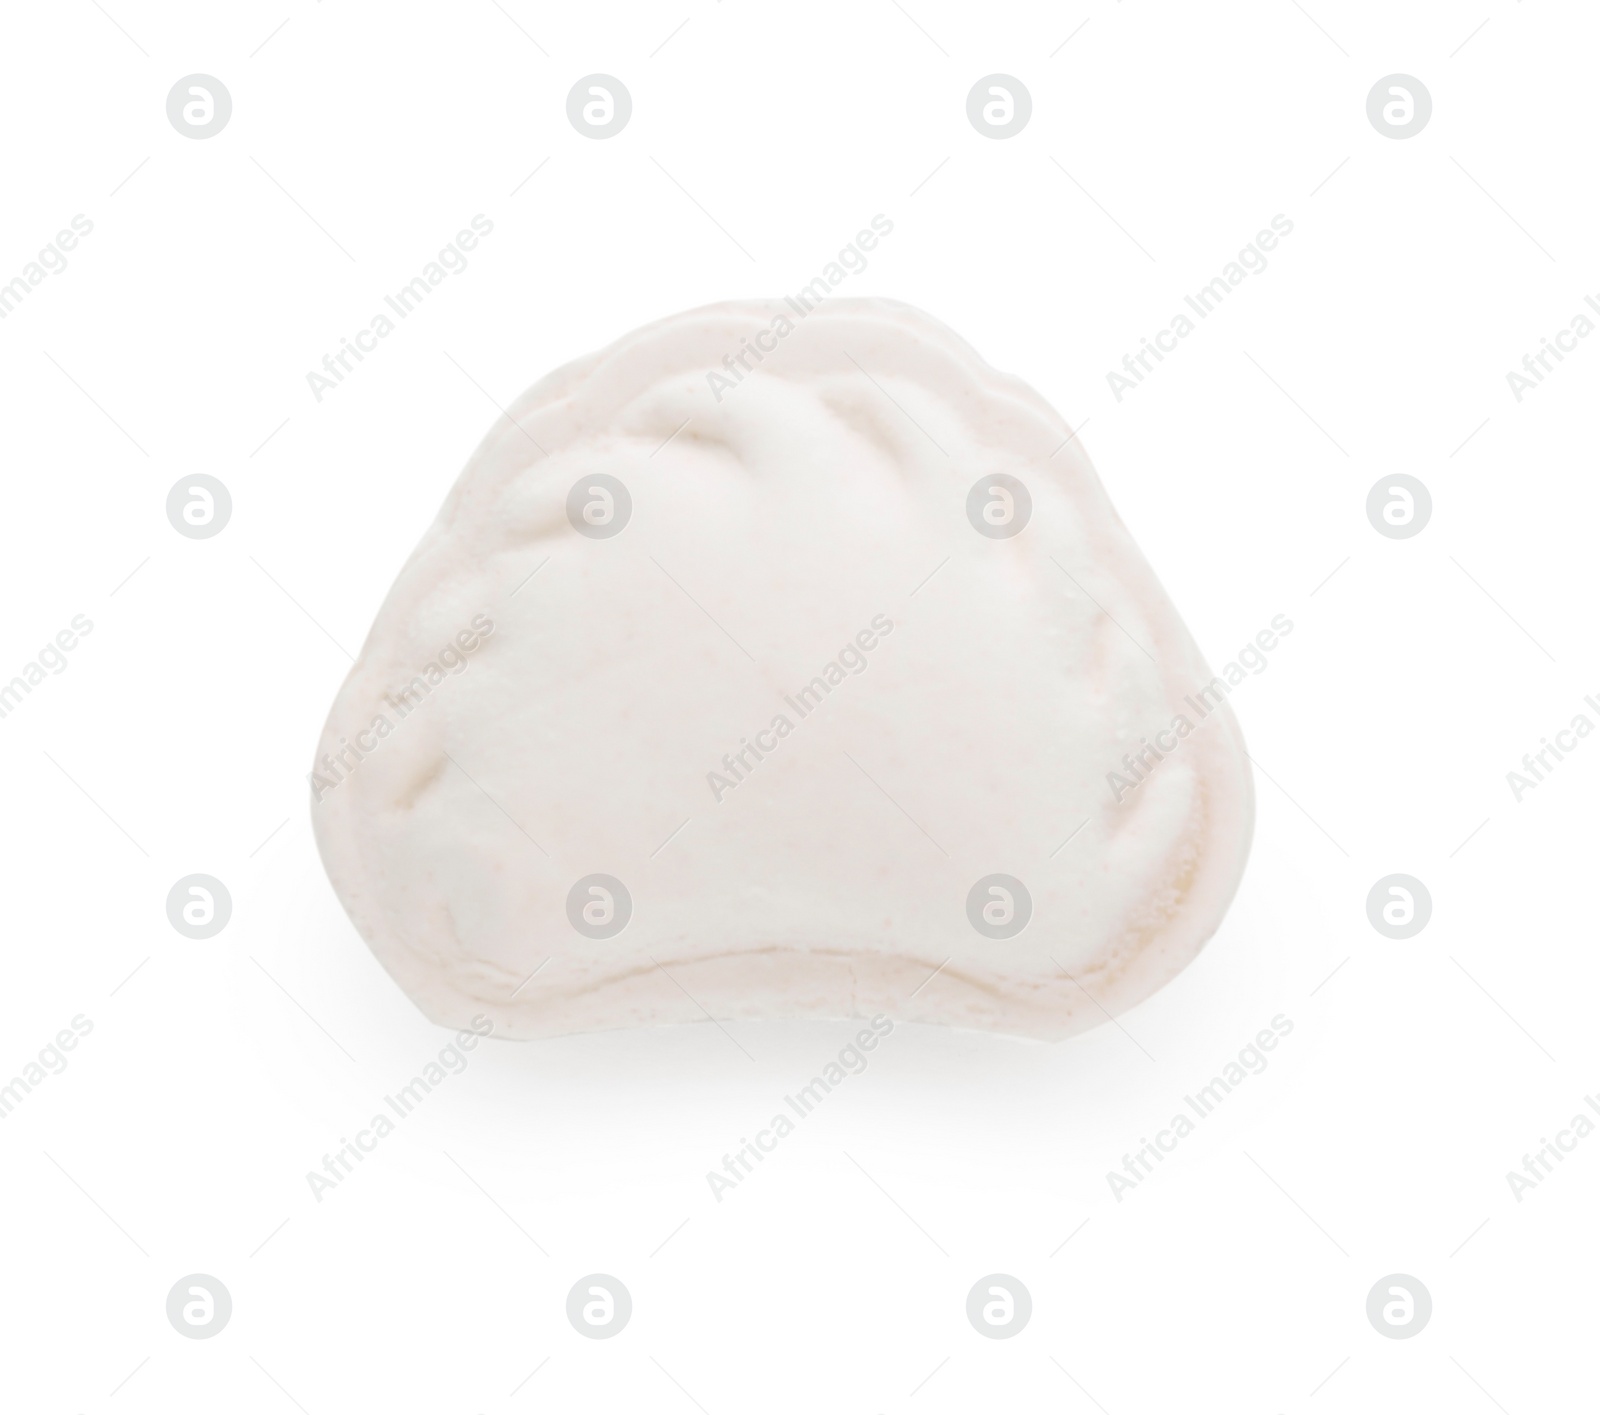 Photo of Raw dumpling (varenyk) on white background, top view